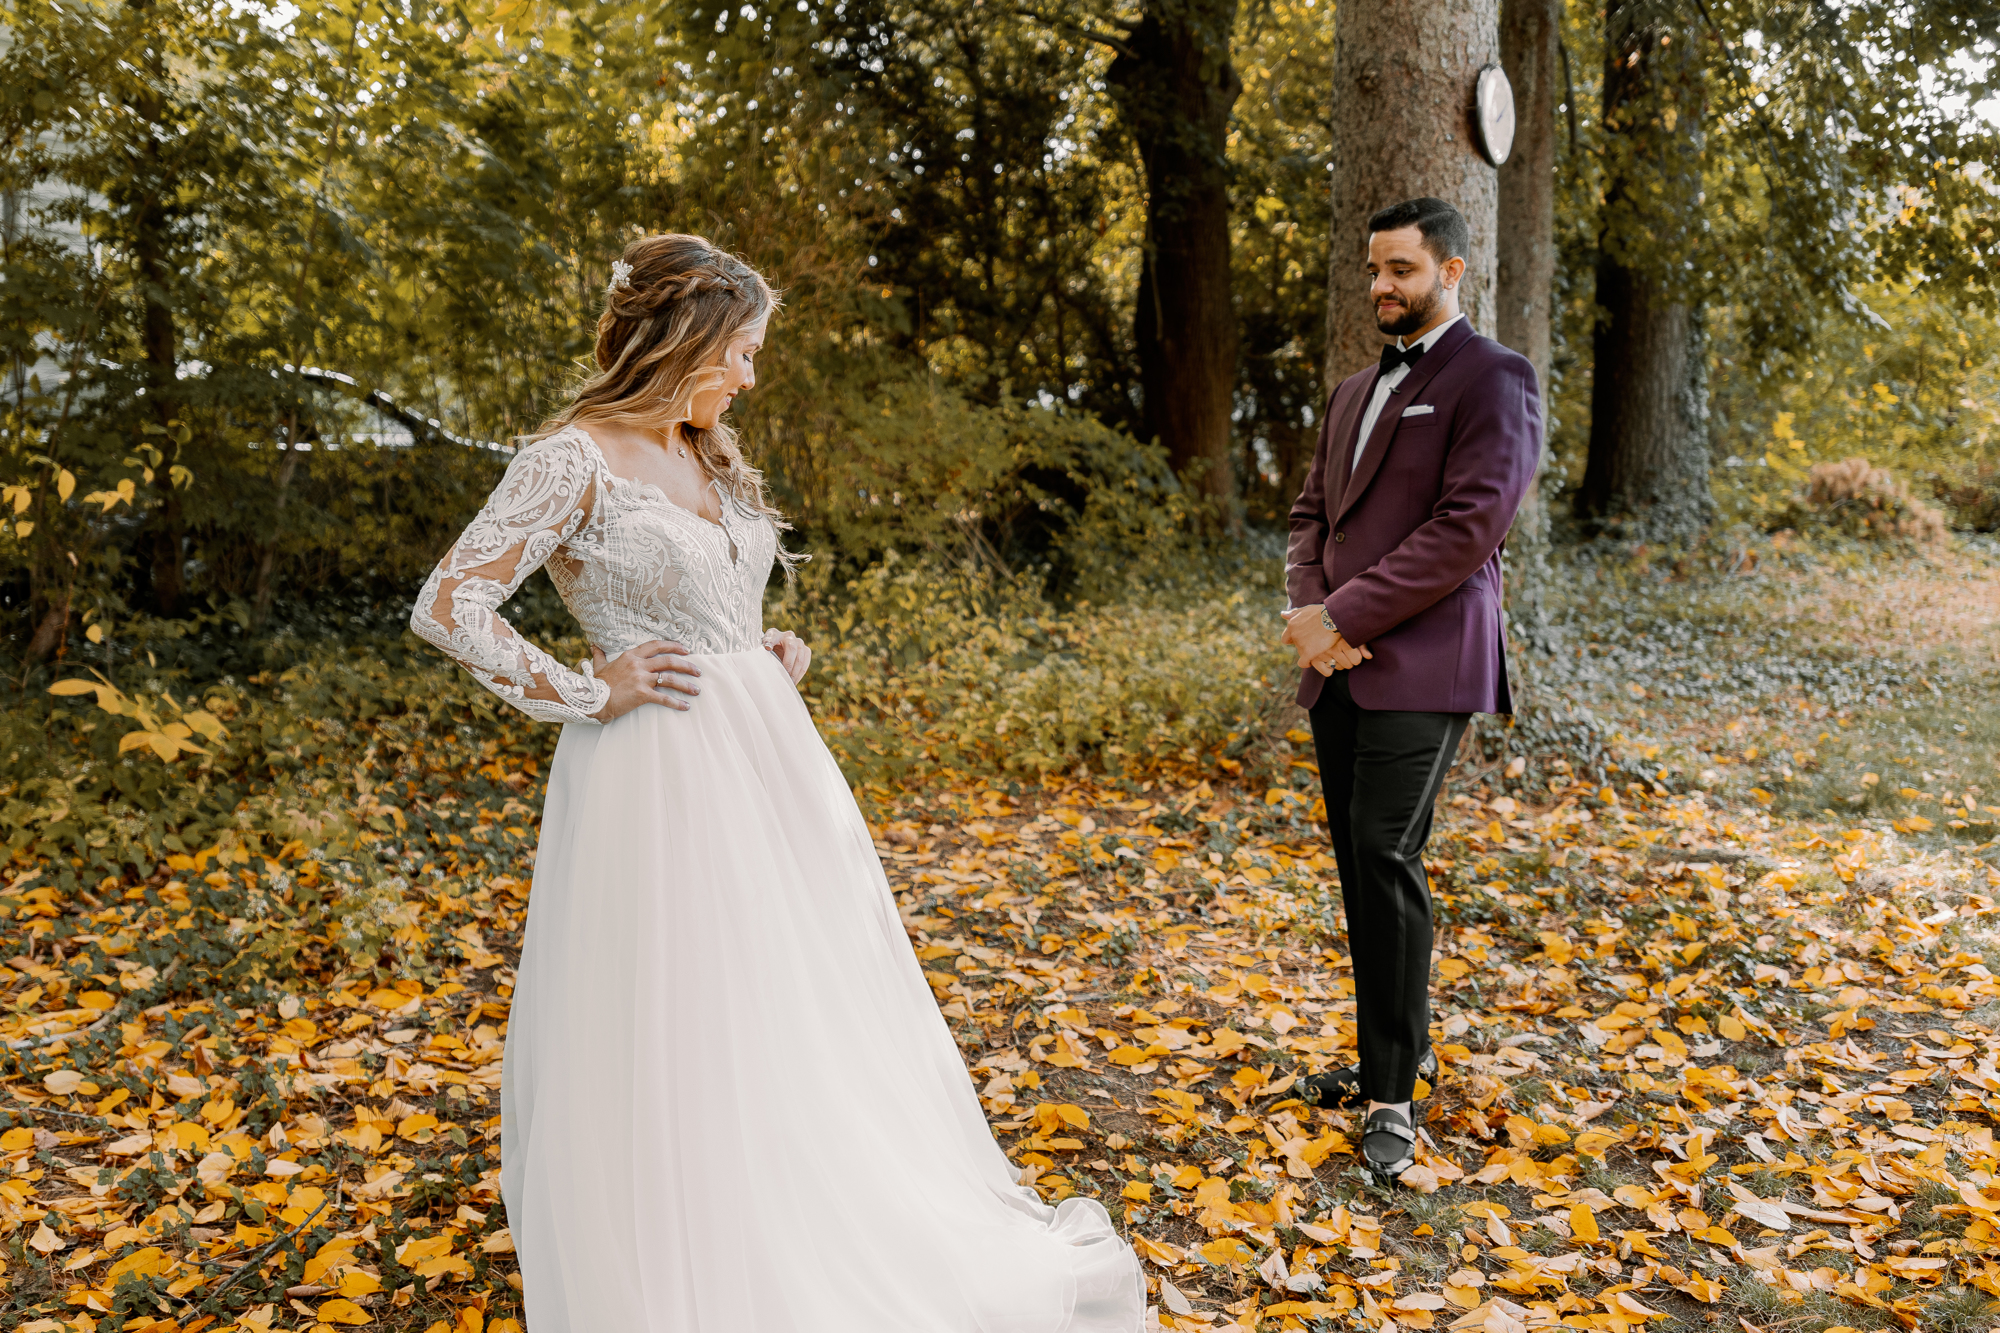 First look at fall backyard wedding